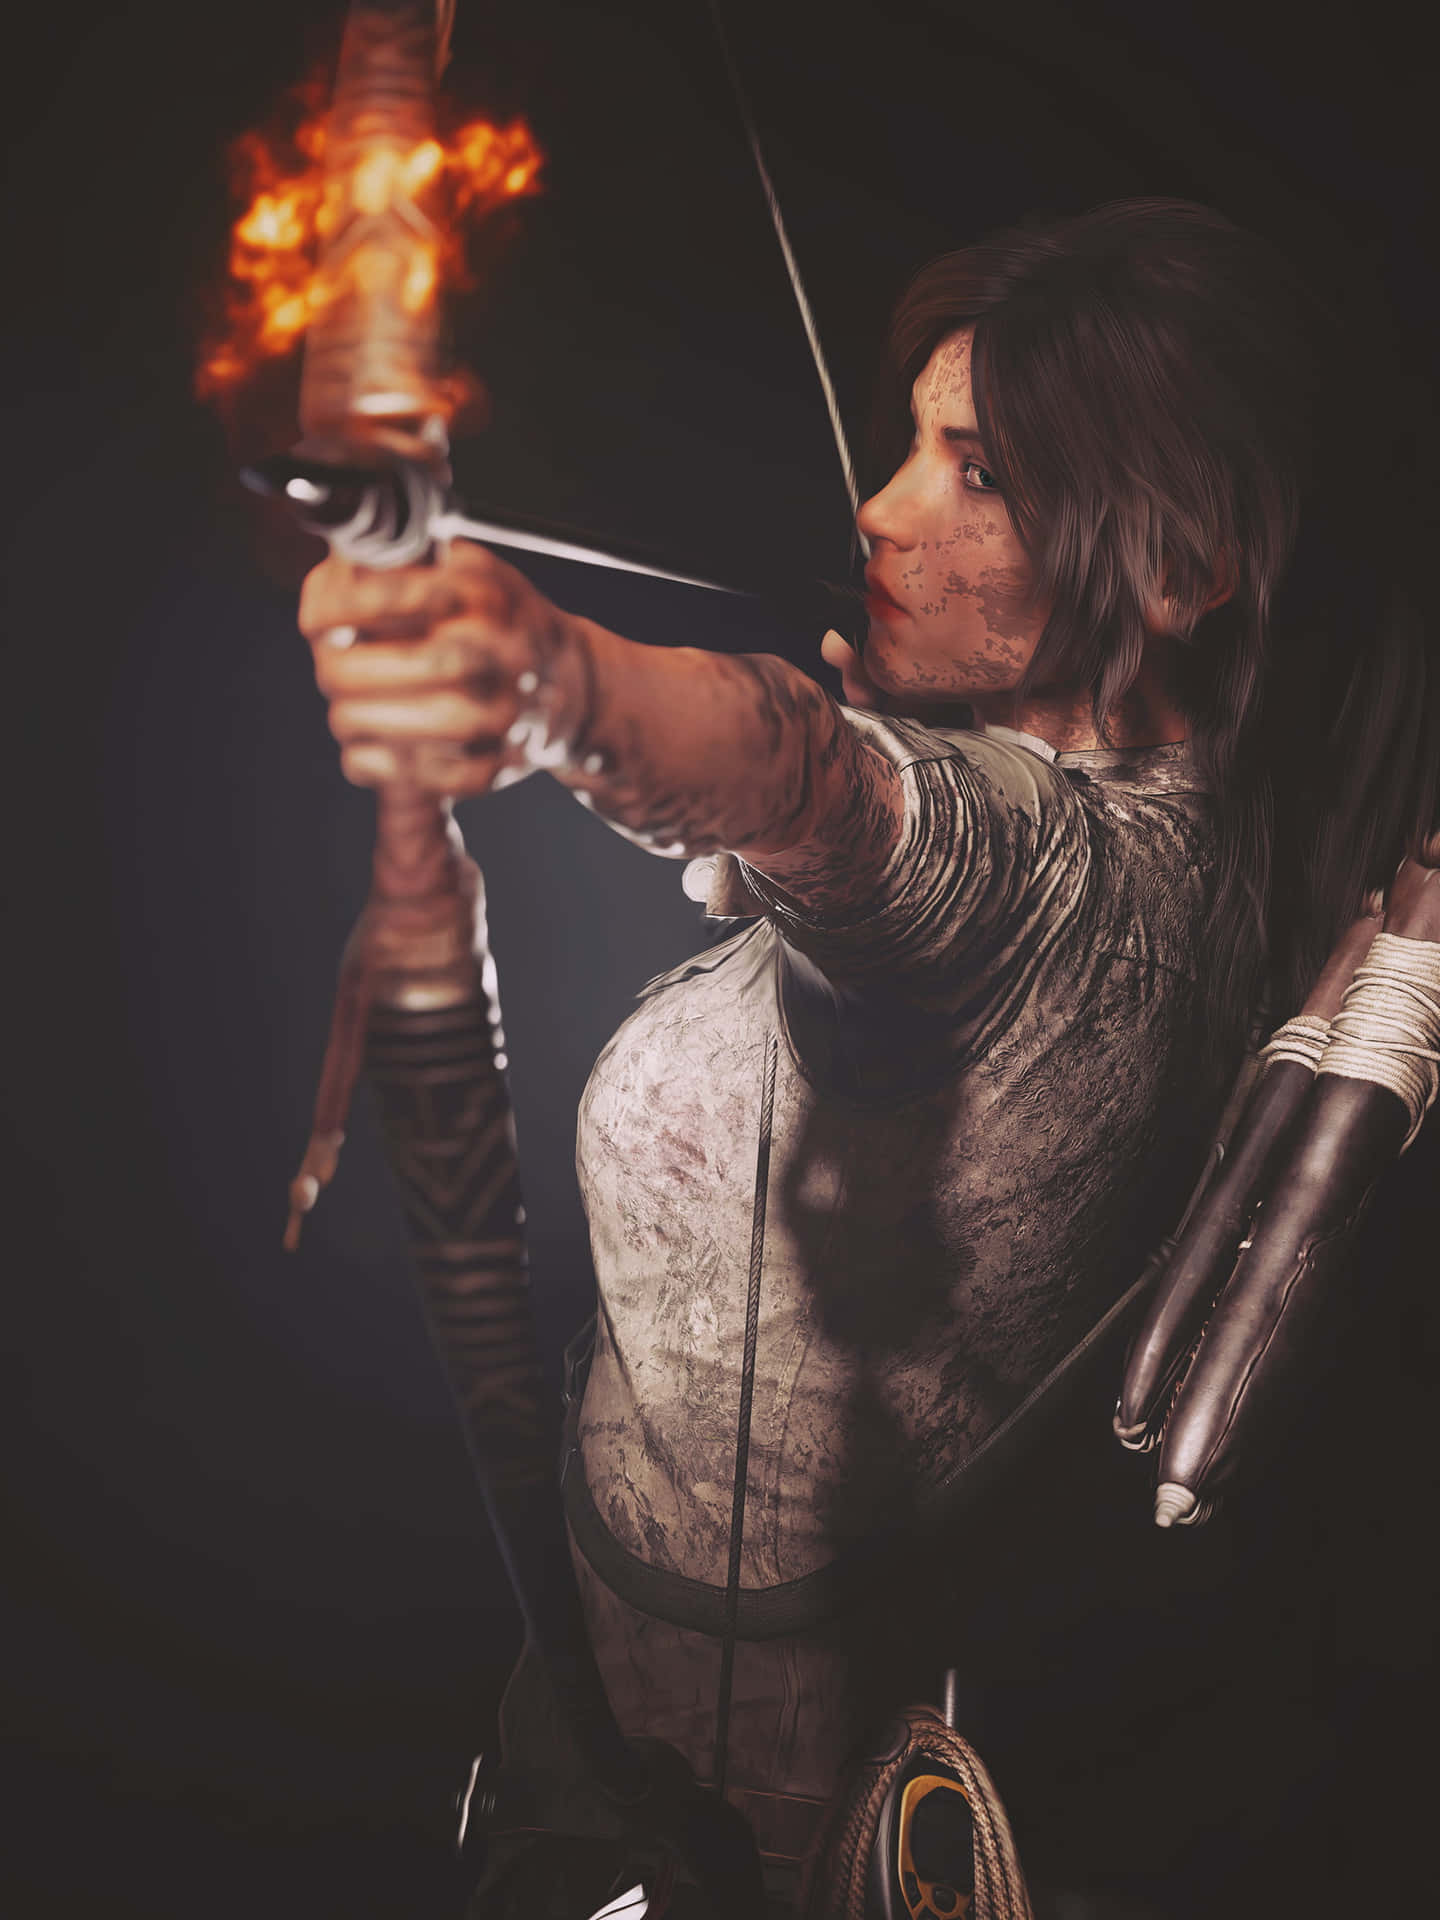 Plano De Fundo Do Android Rise Of The Tomb Raider